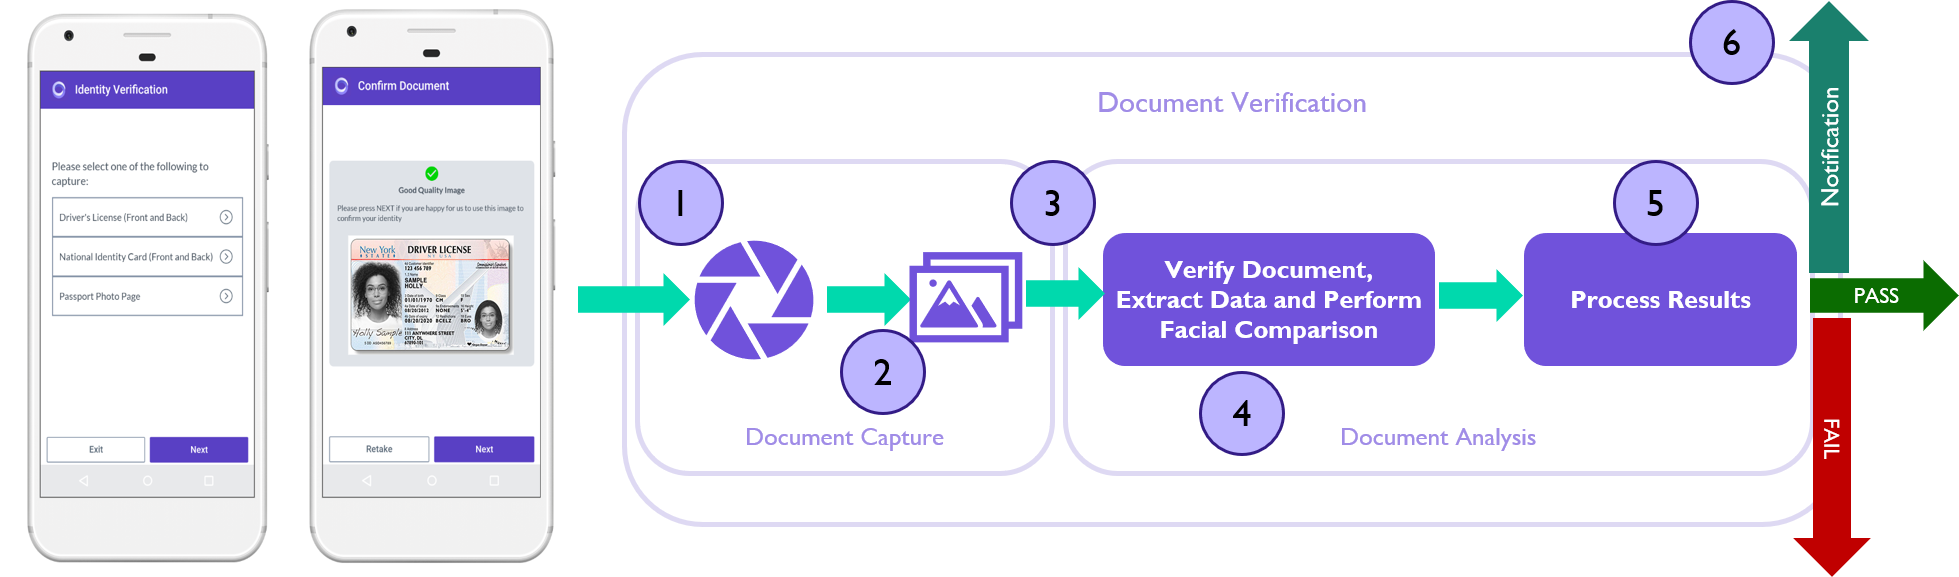 Document Verification Workflow